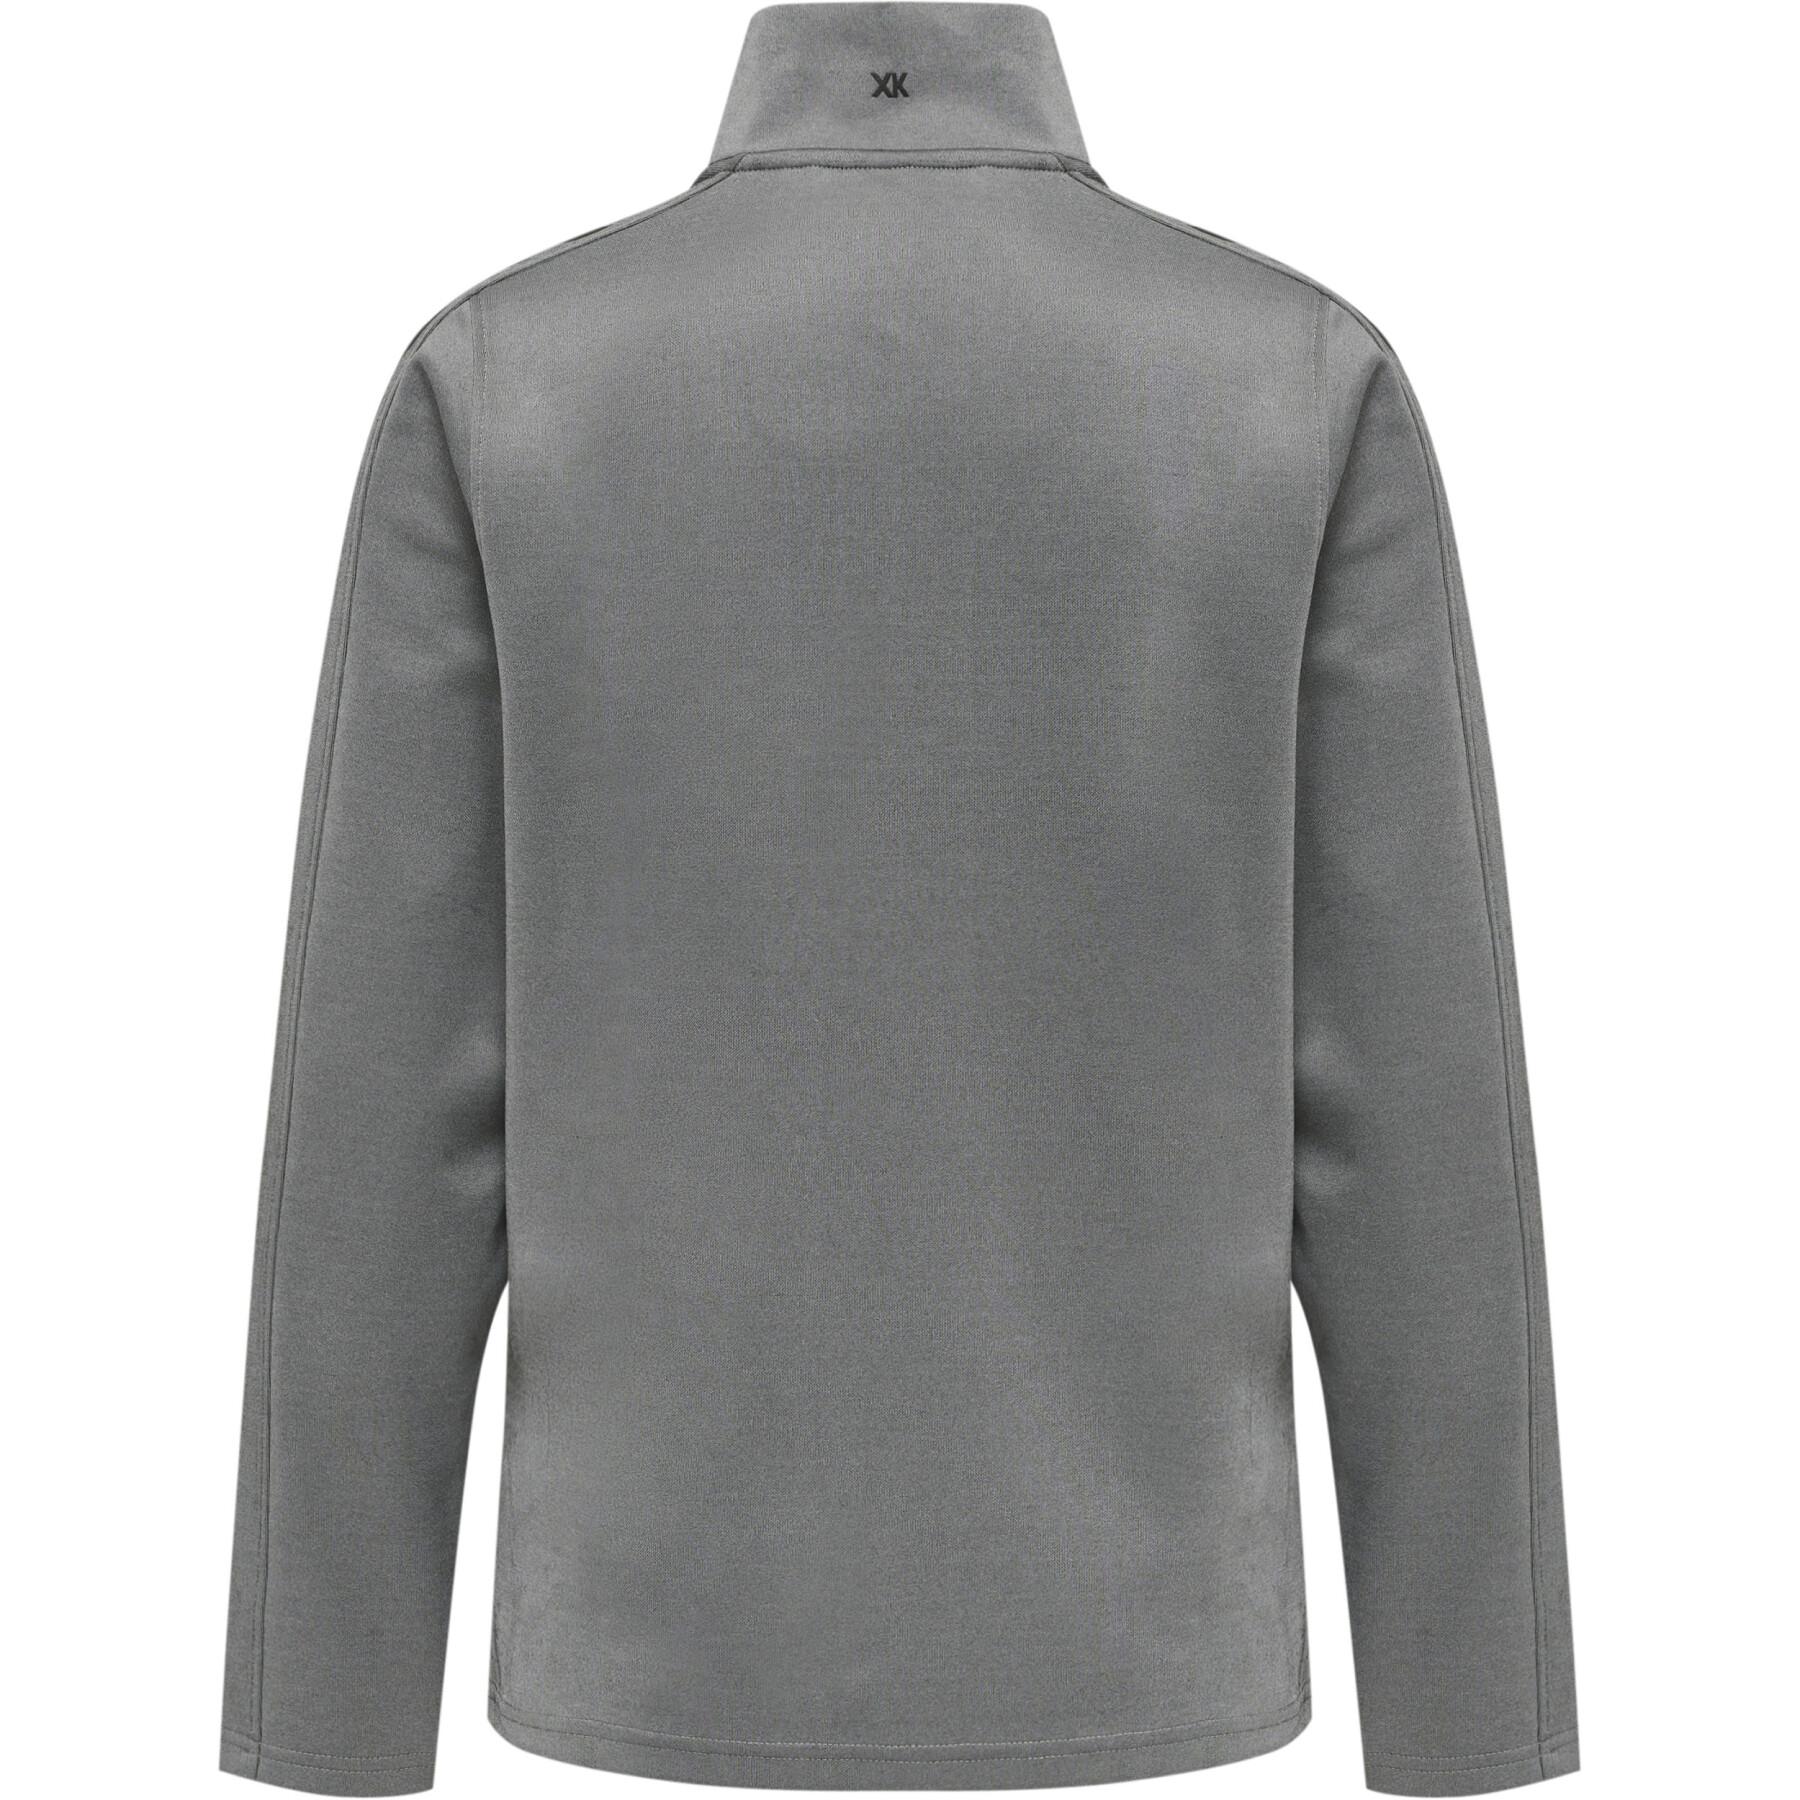 Damska bluza dresowa half zip Hummel Core XK